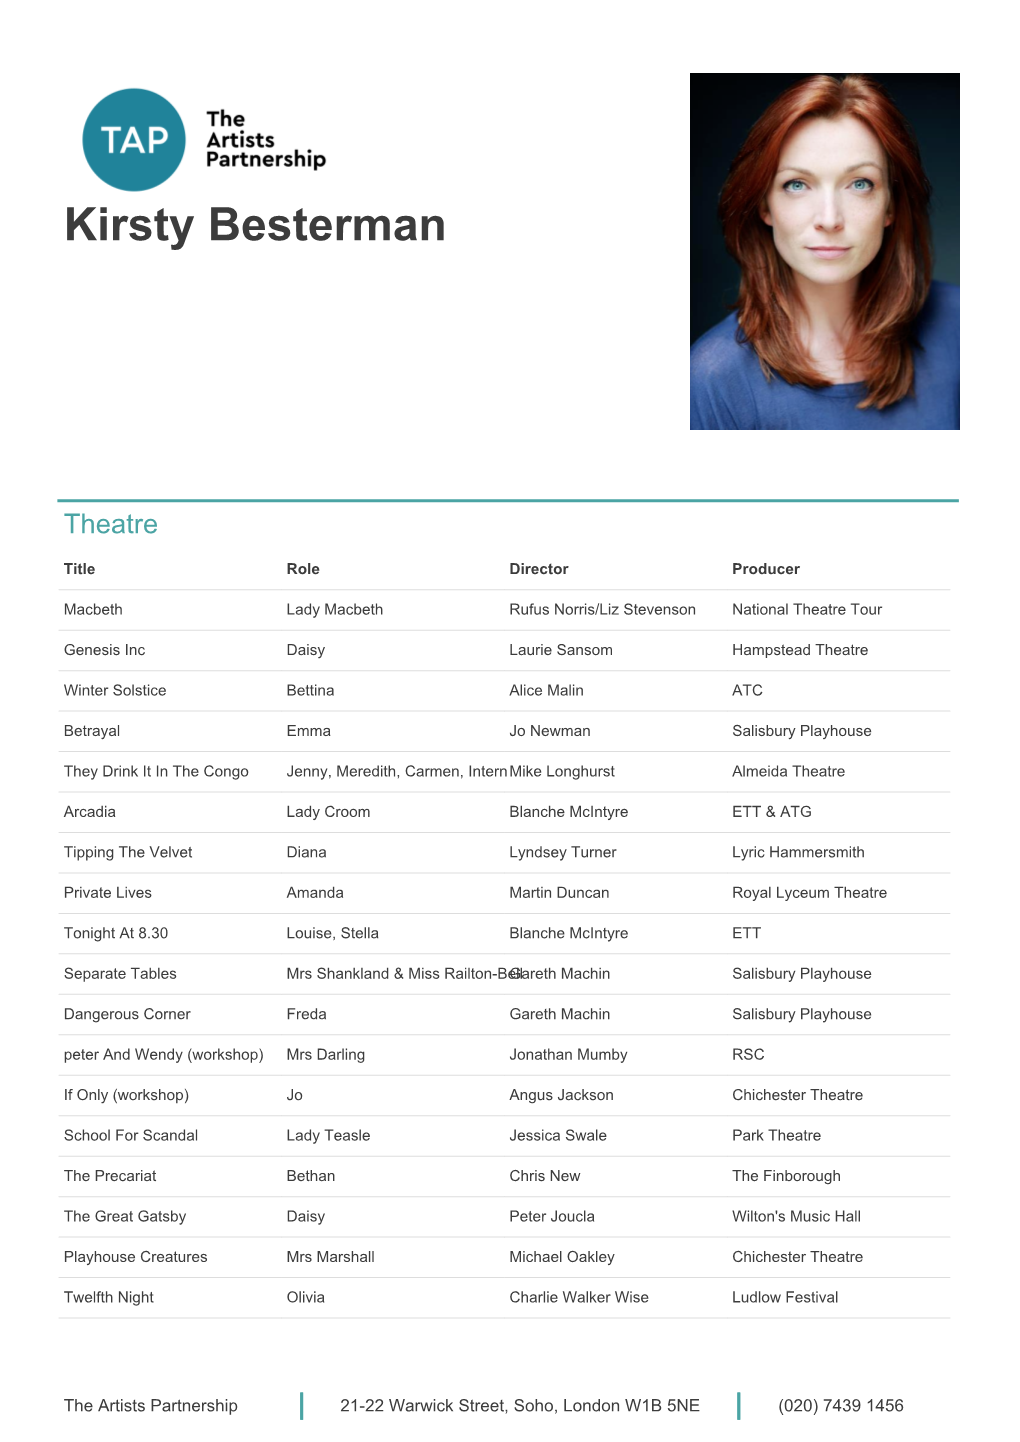 Kirsty Besterman